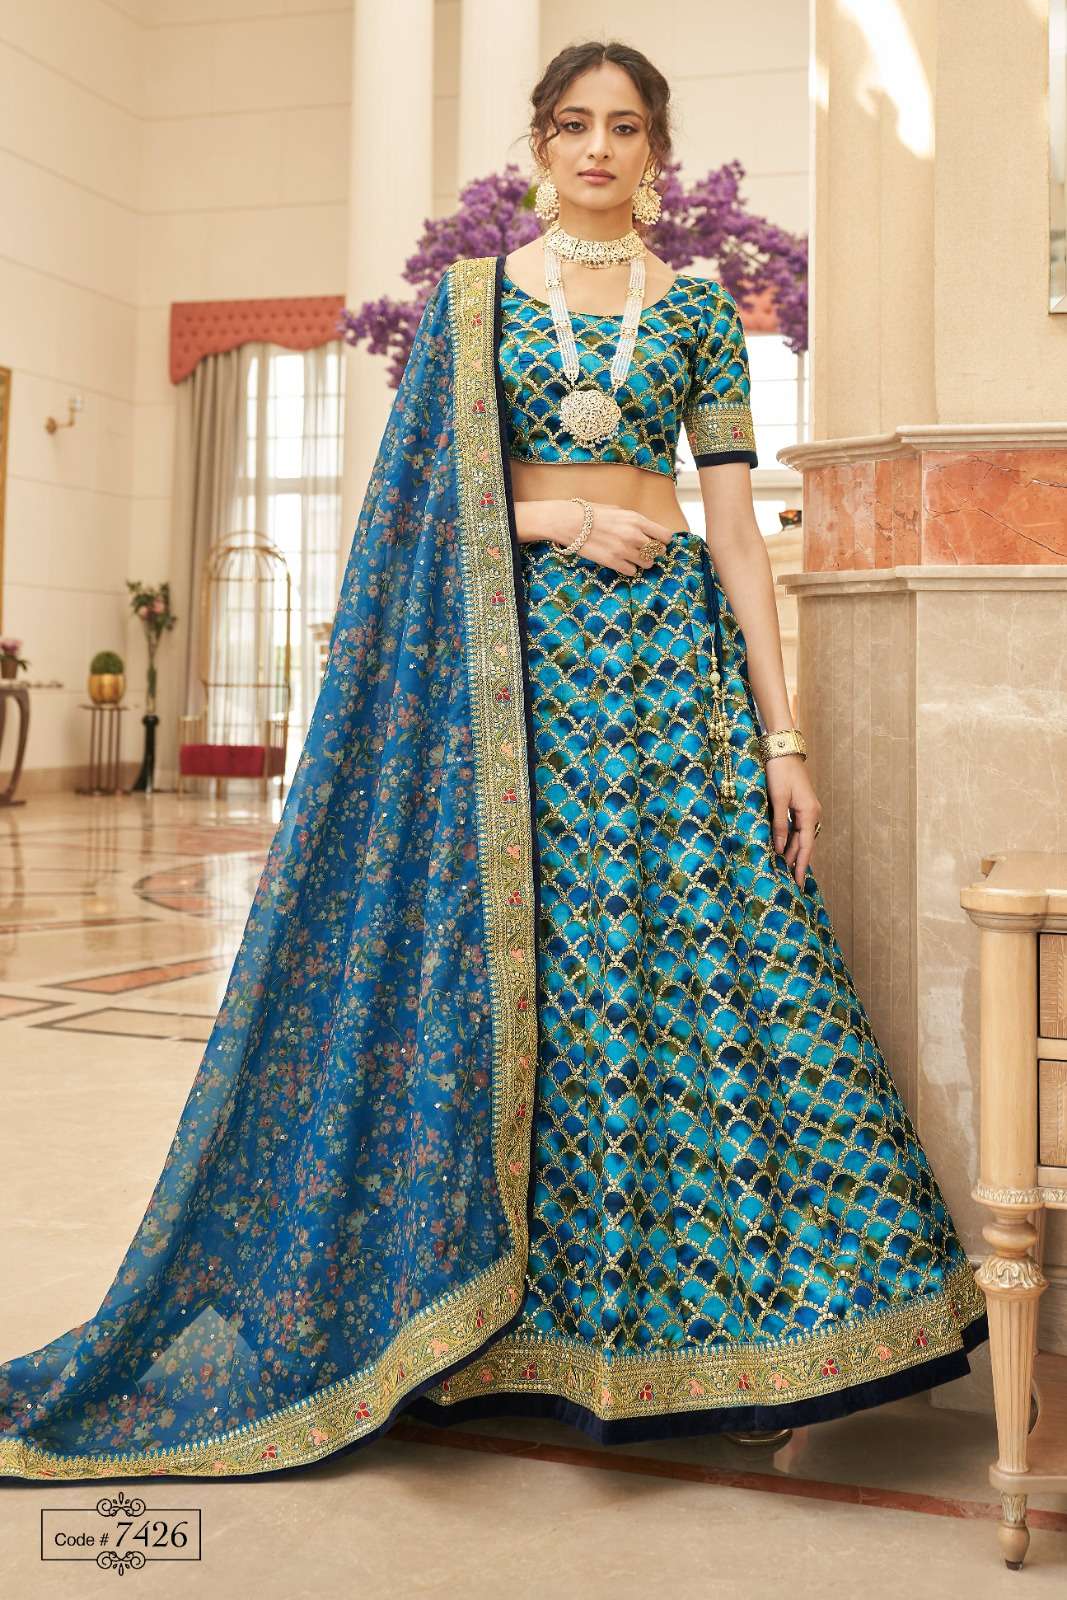 zeel 7426 designer work single blue color lehenga choli with floral print dupatta